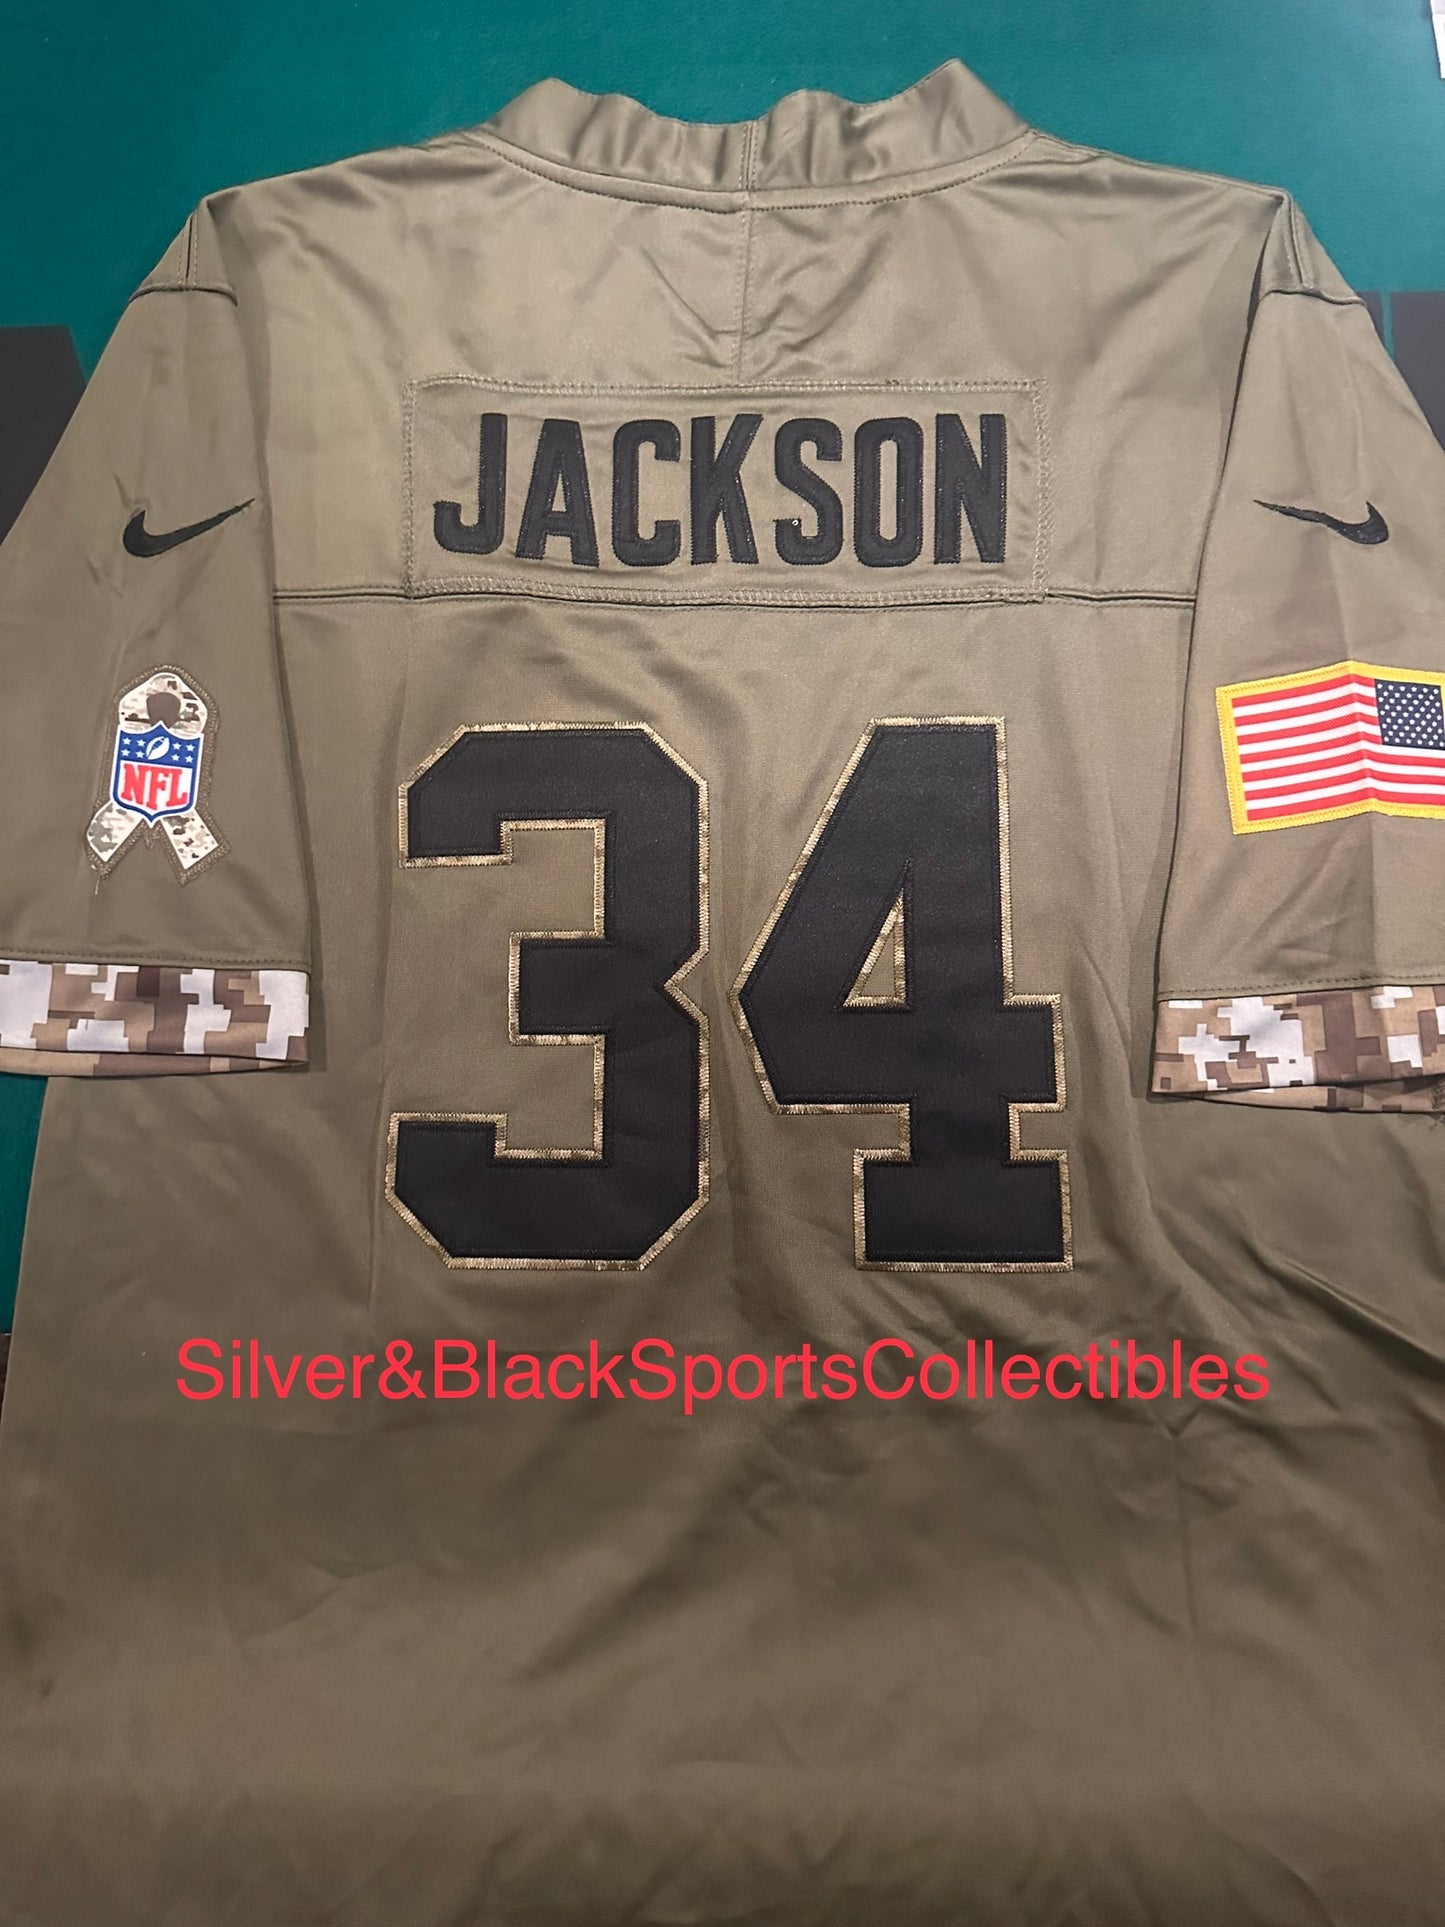 Bo Jackson Salute to Service Stitched Las Vegas Raiders Jersey